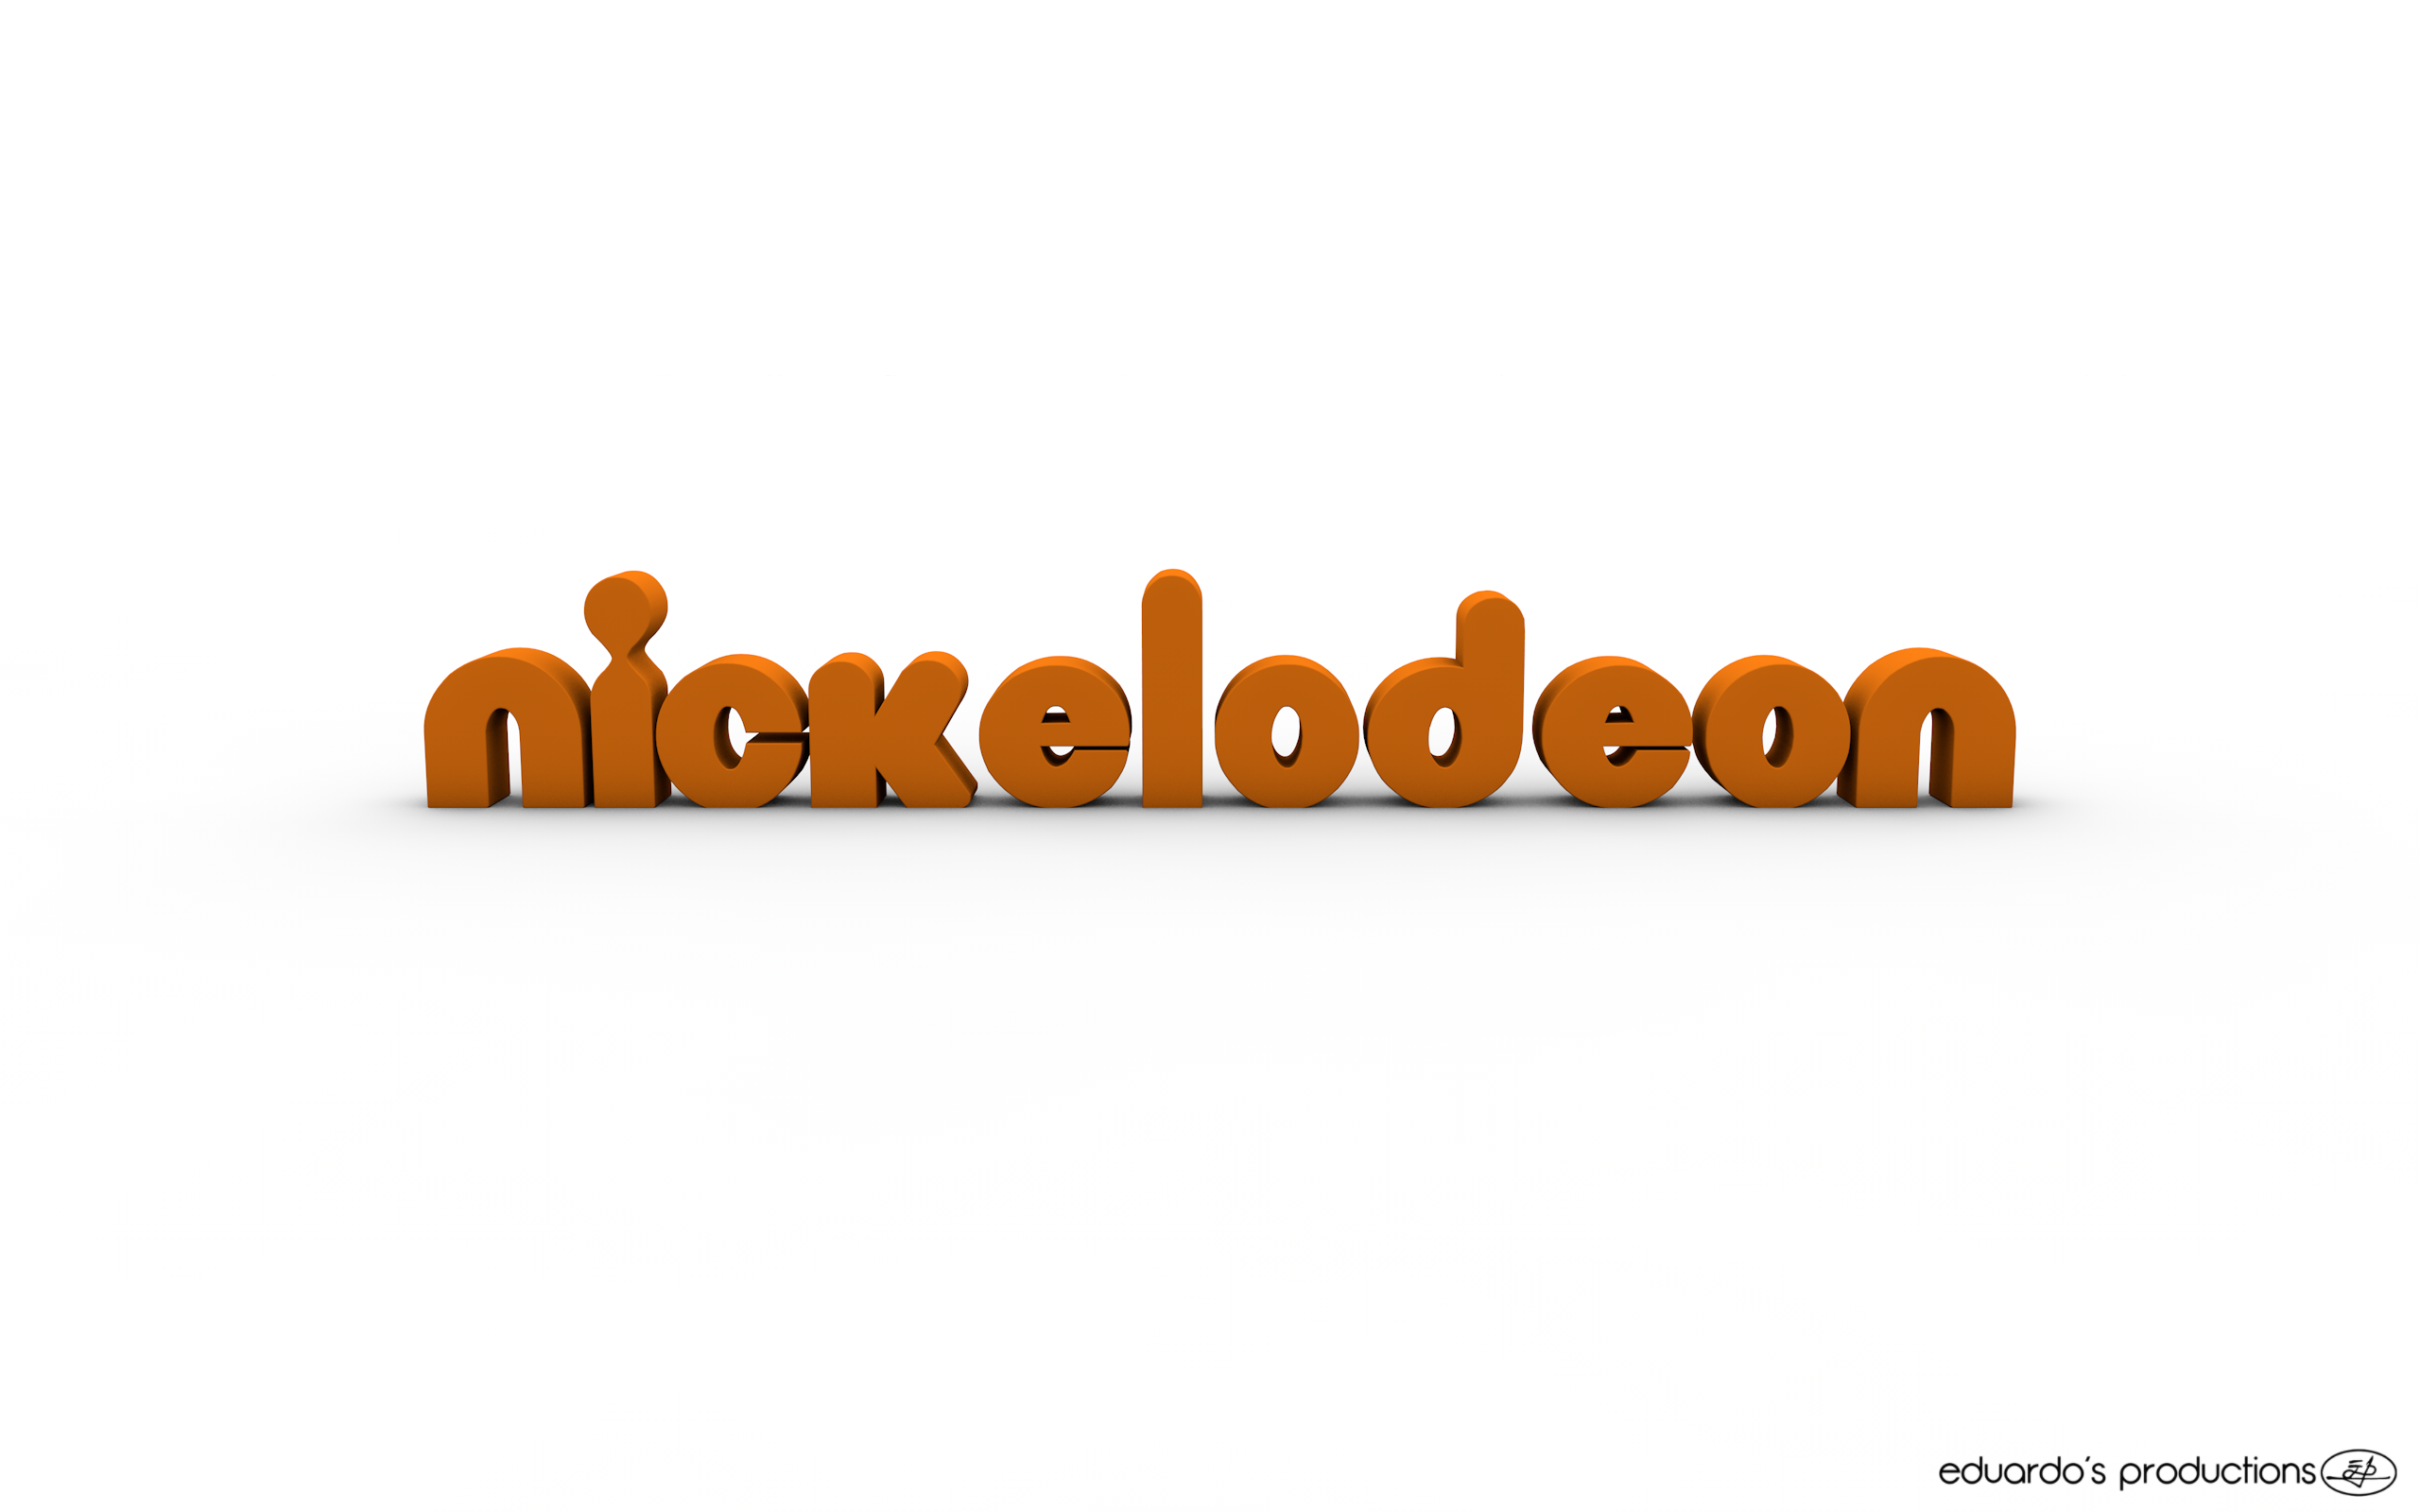 Nickelodeon 01 by EduardoHurtado on DeviantArt